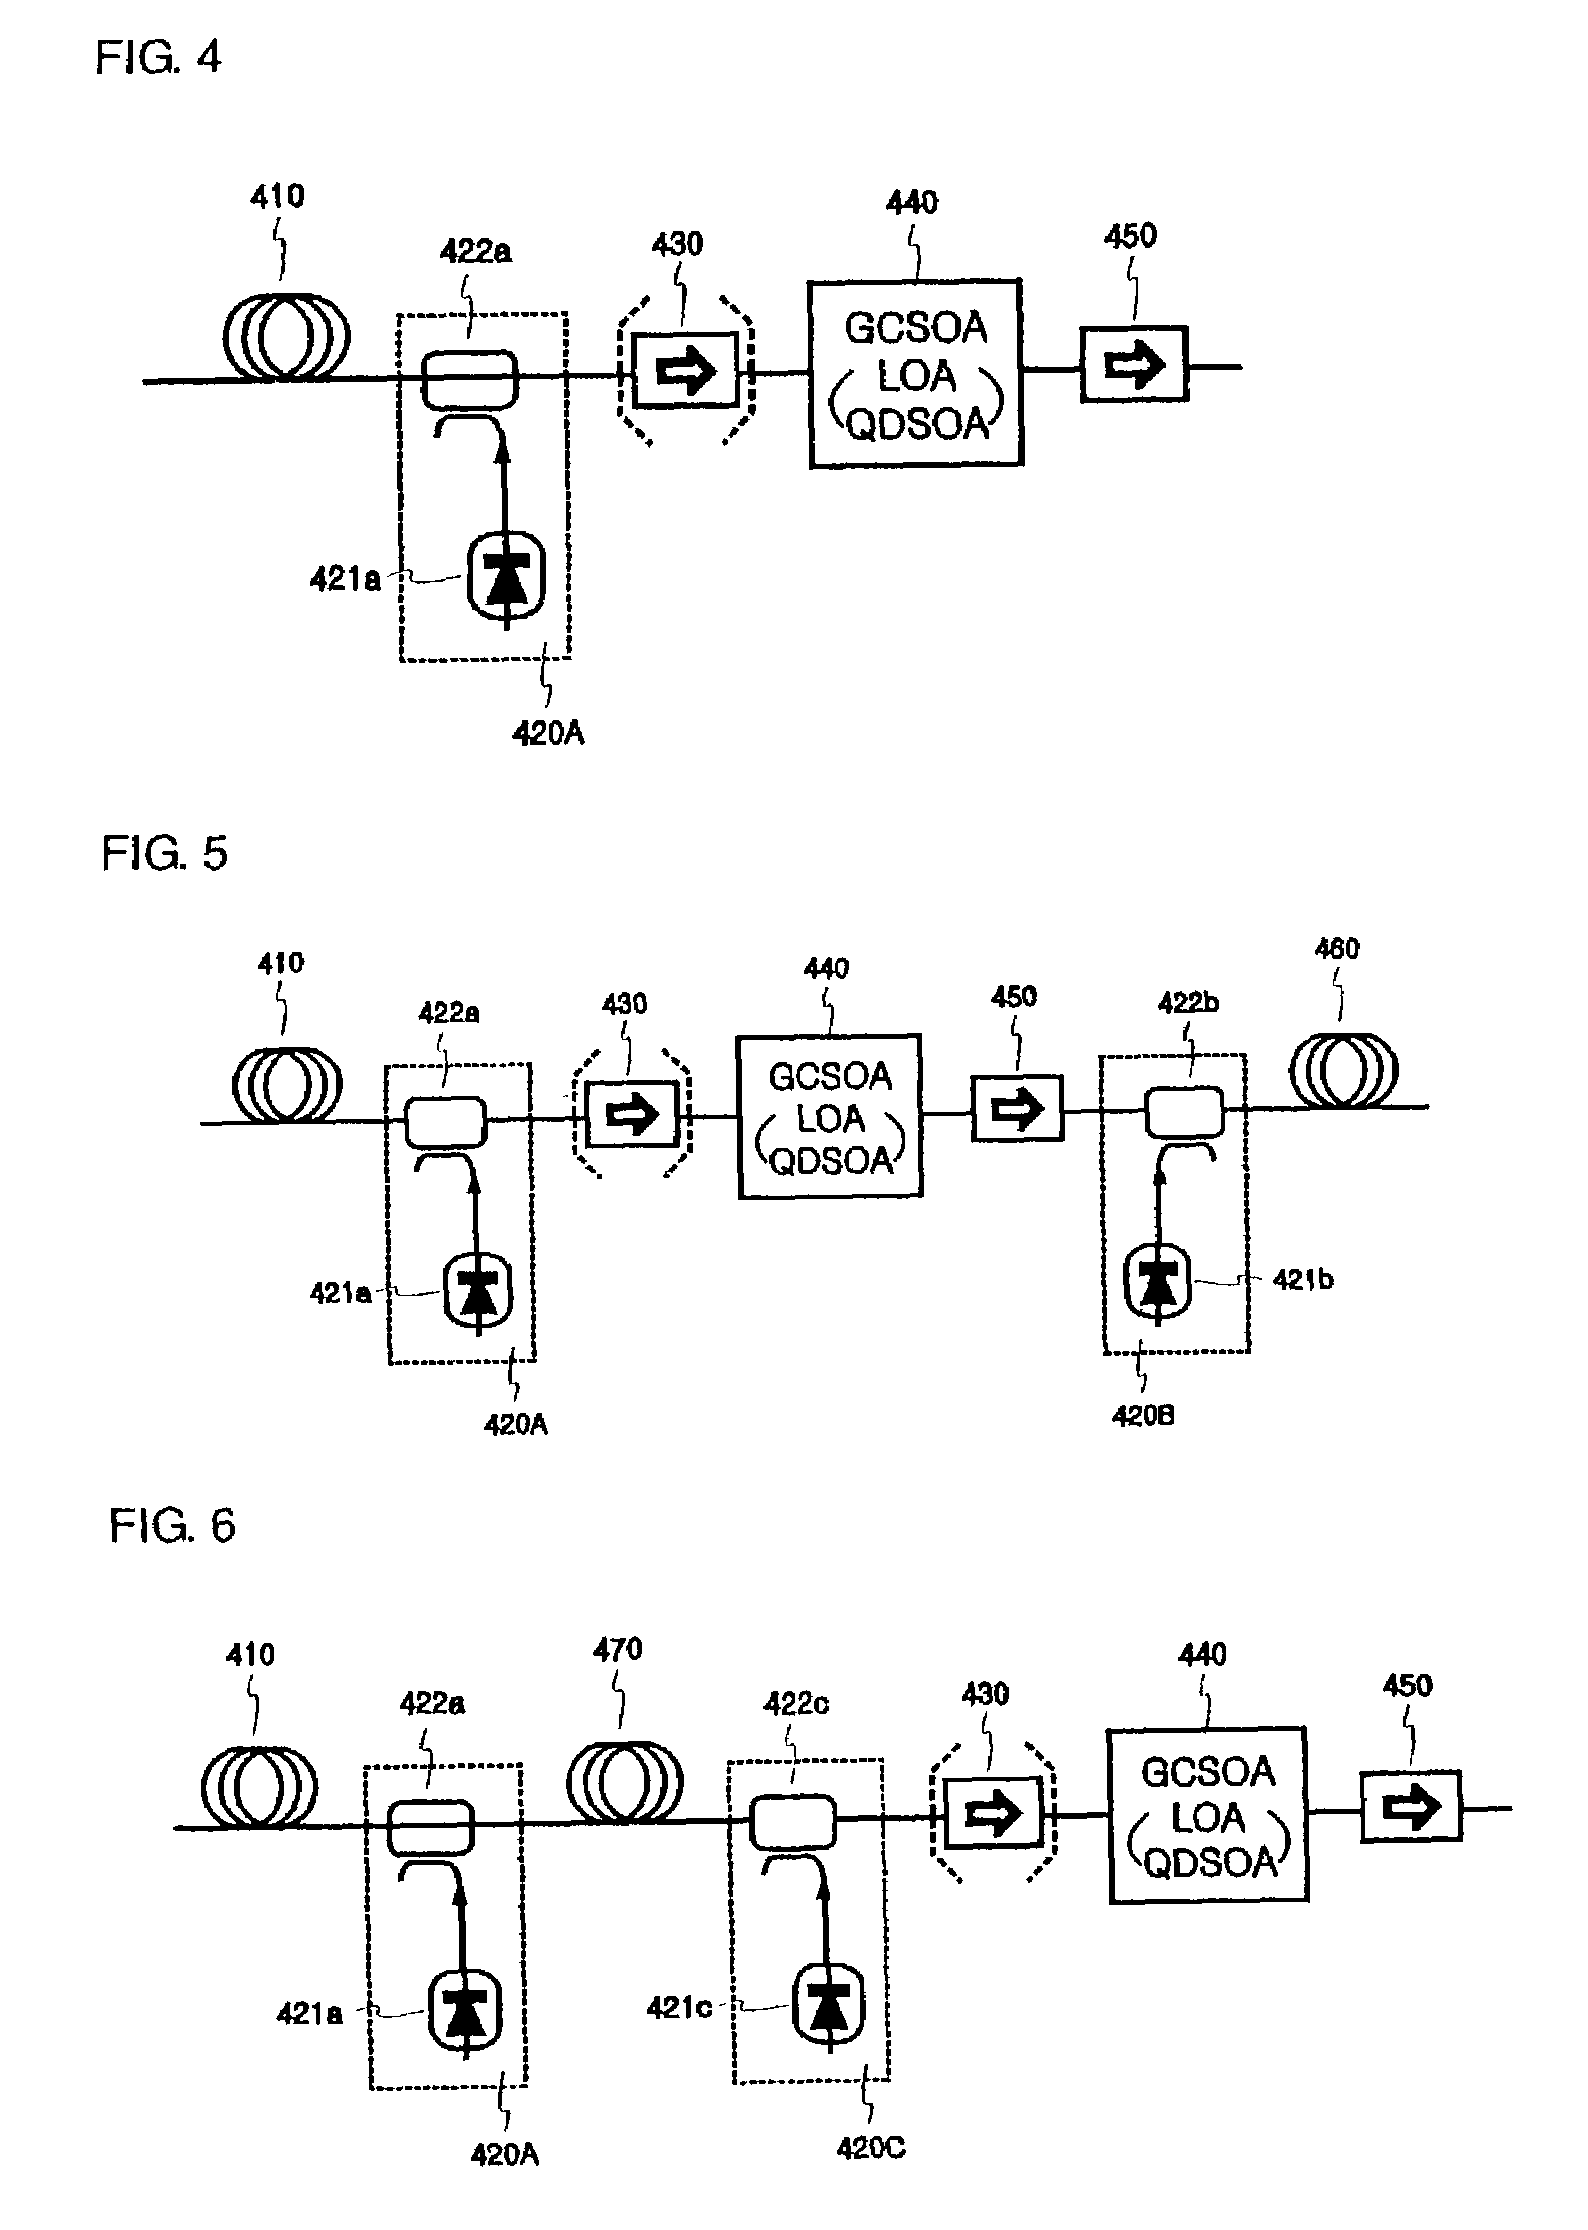 Hybrid optical amplifier coupling Raman fiber amplifier and semiconductor optical amplifier